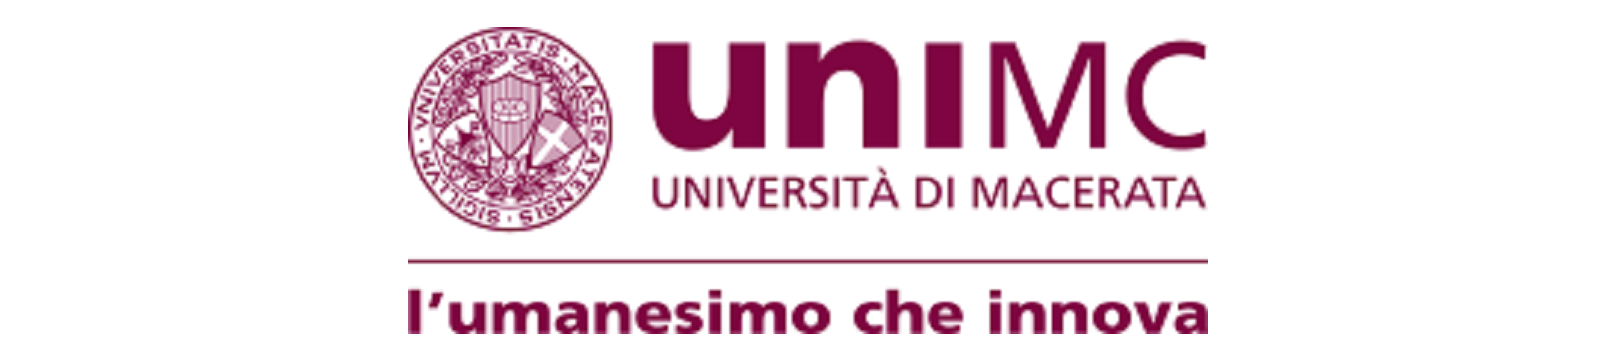 University of Macerata joins ICDI